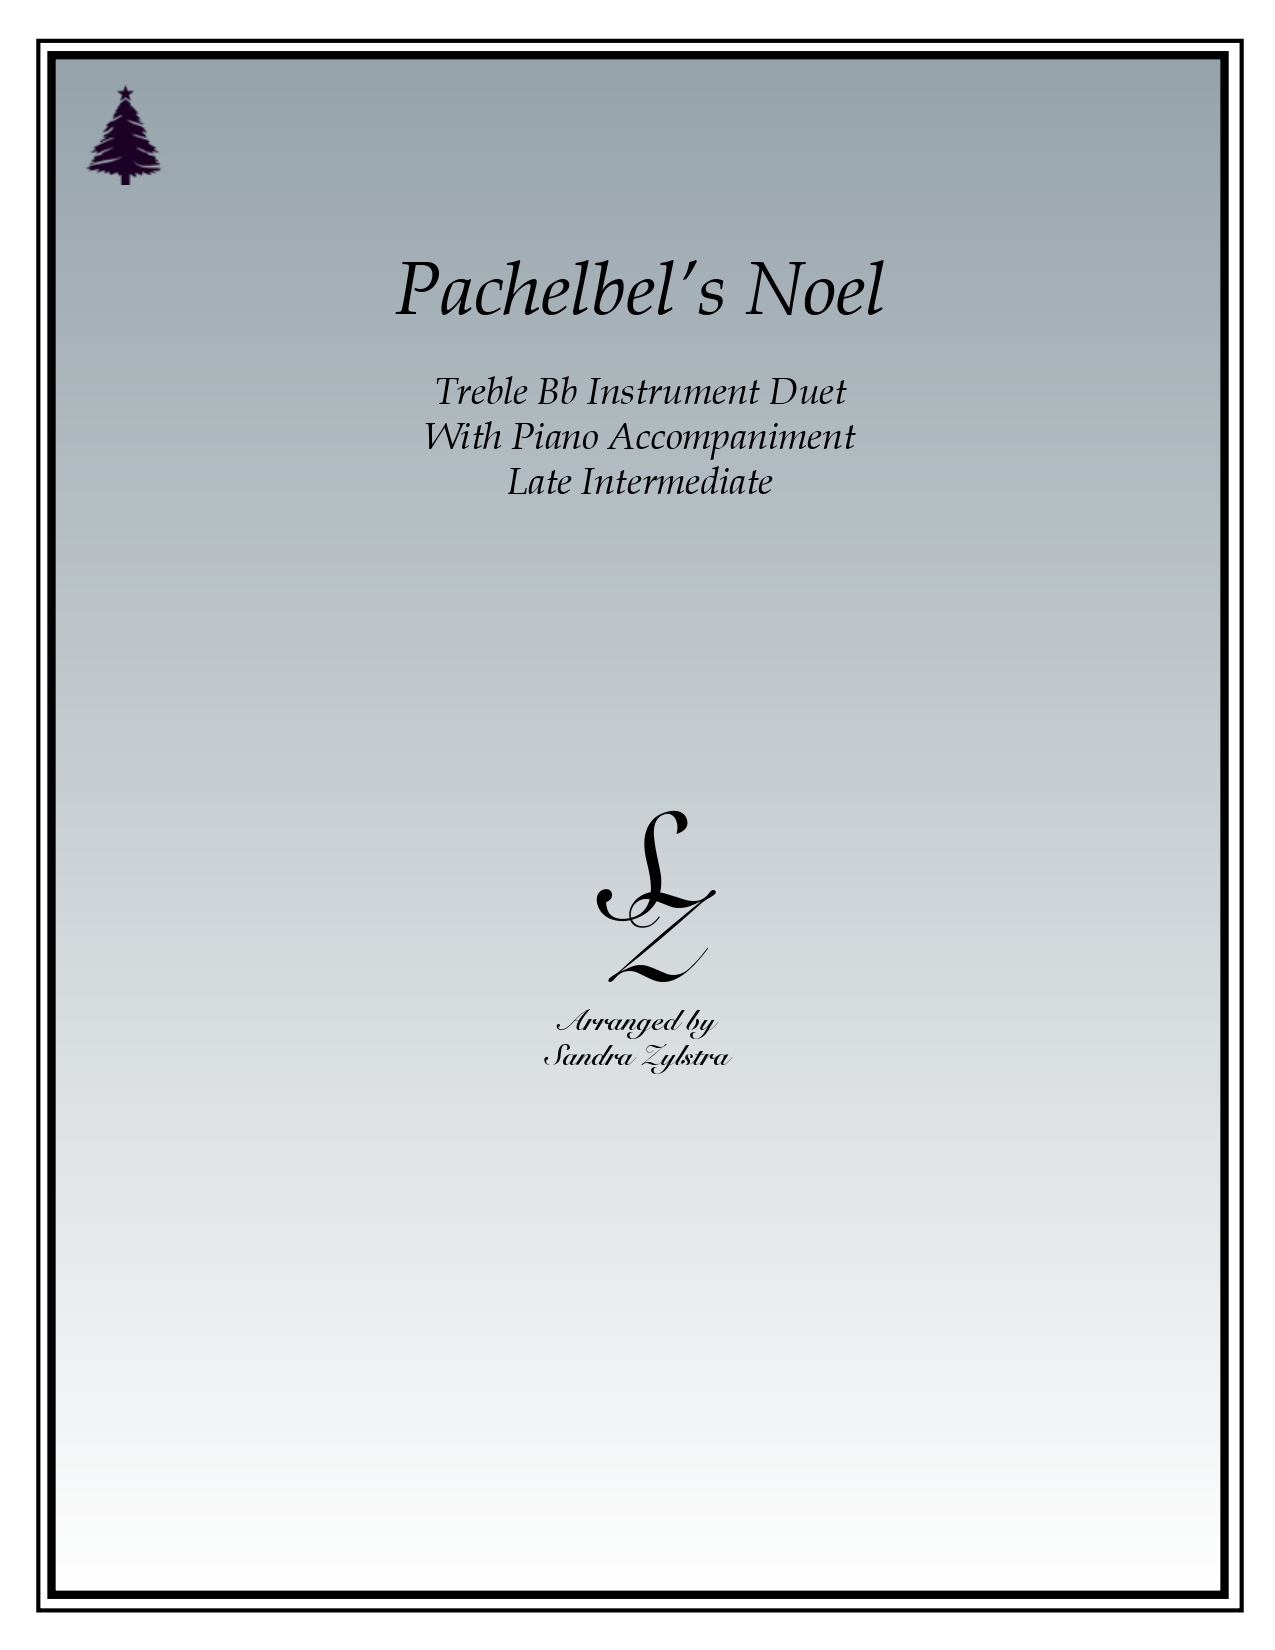 Pachelbels Noel Bb instrument duet parts cover page 00011